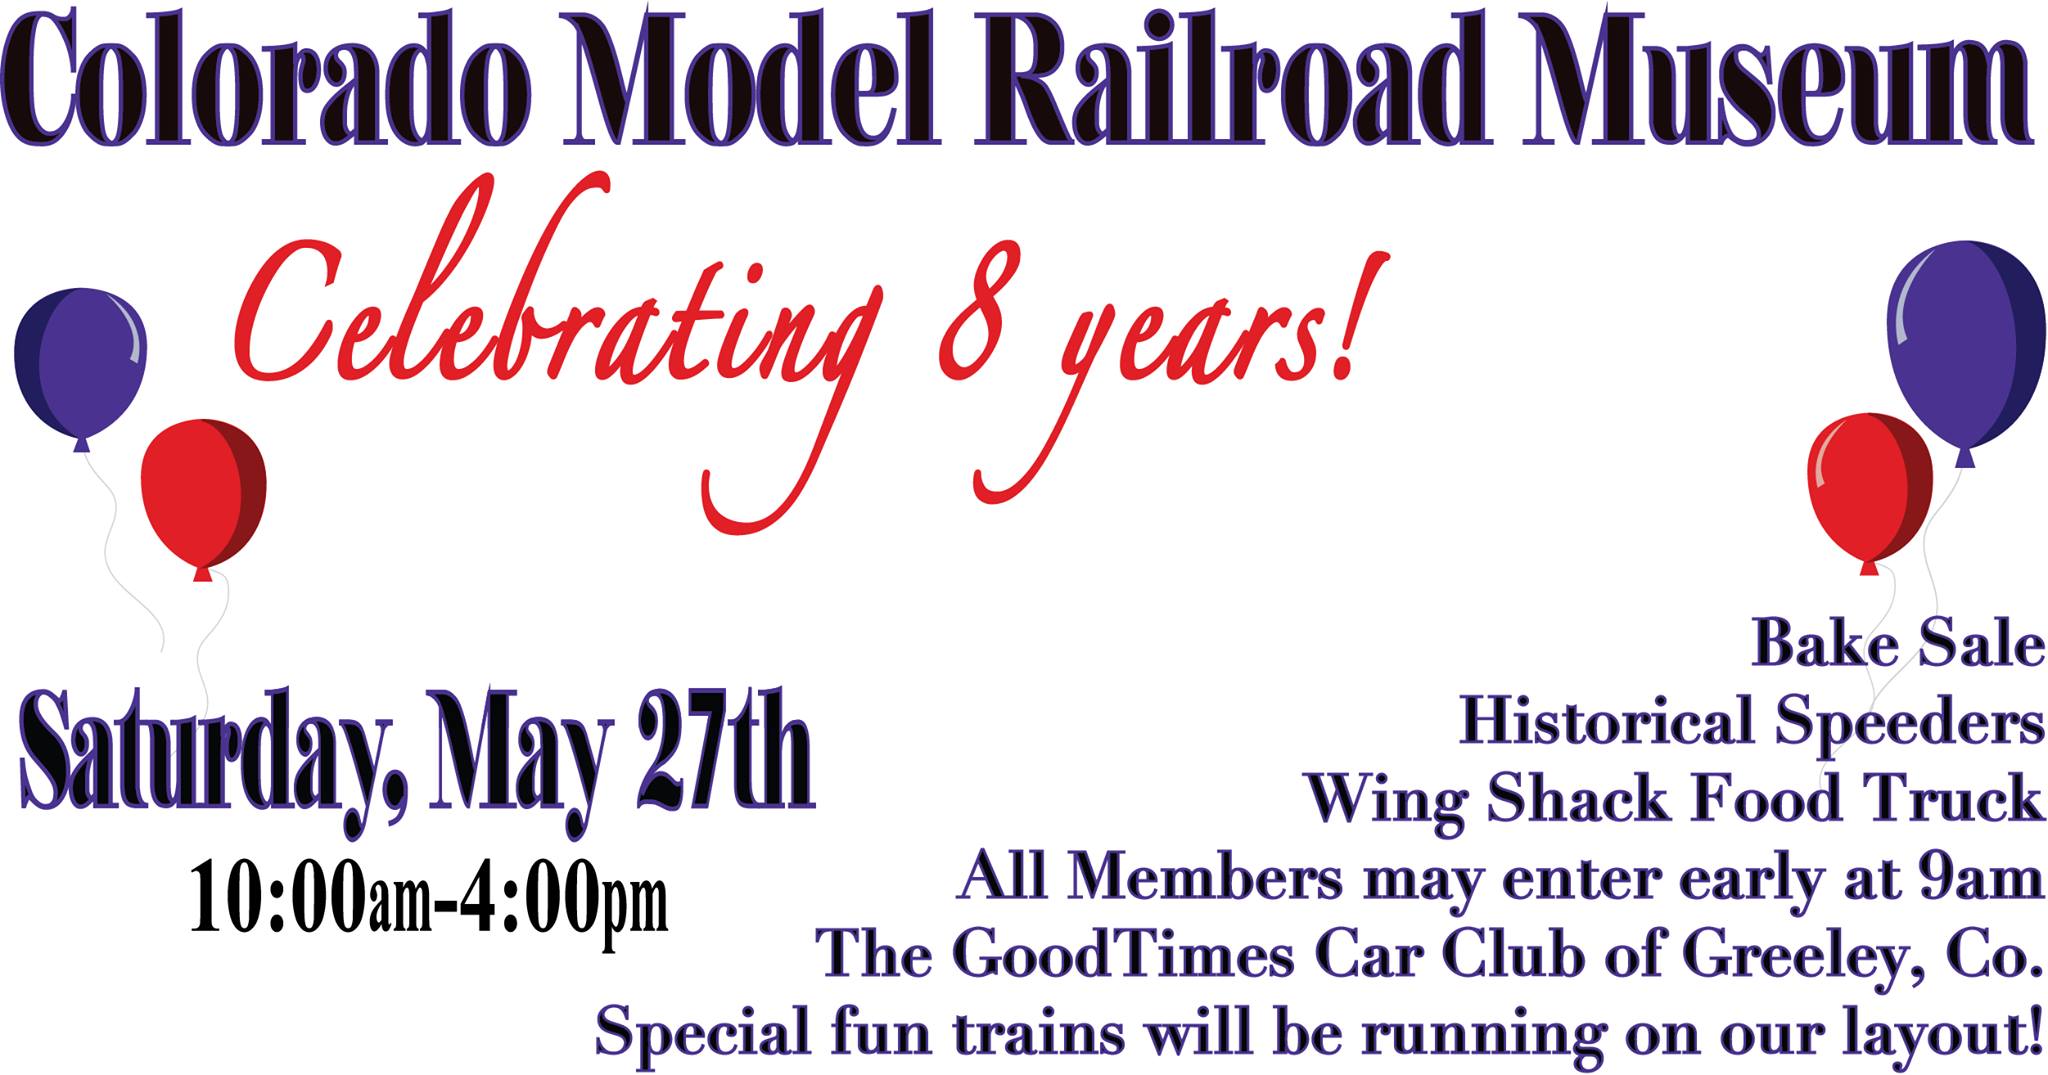 Colorado Model Railroad Museum 8 Year Anniversary